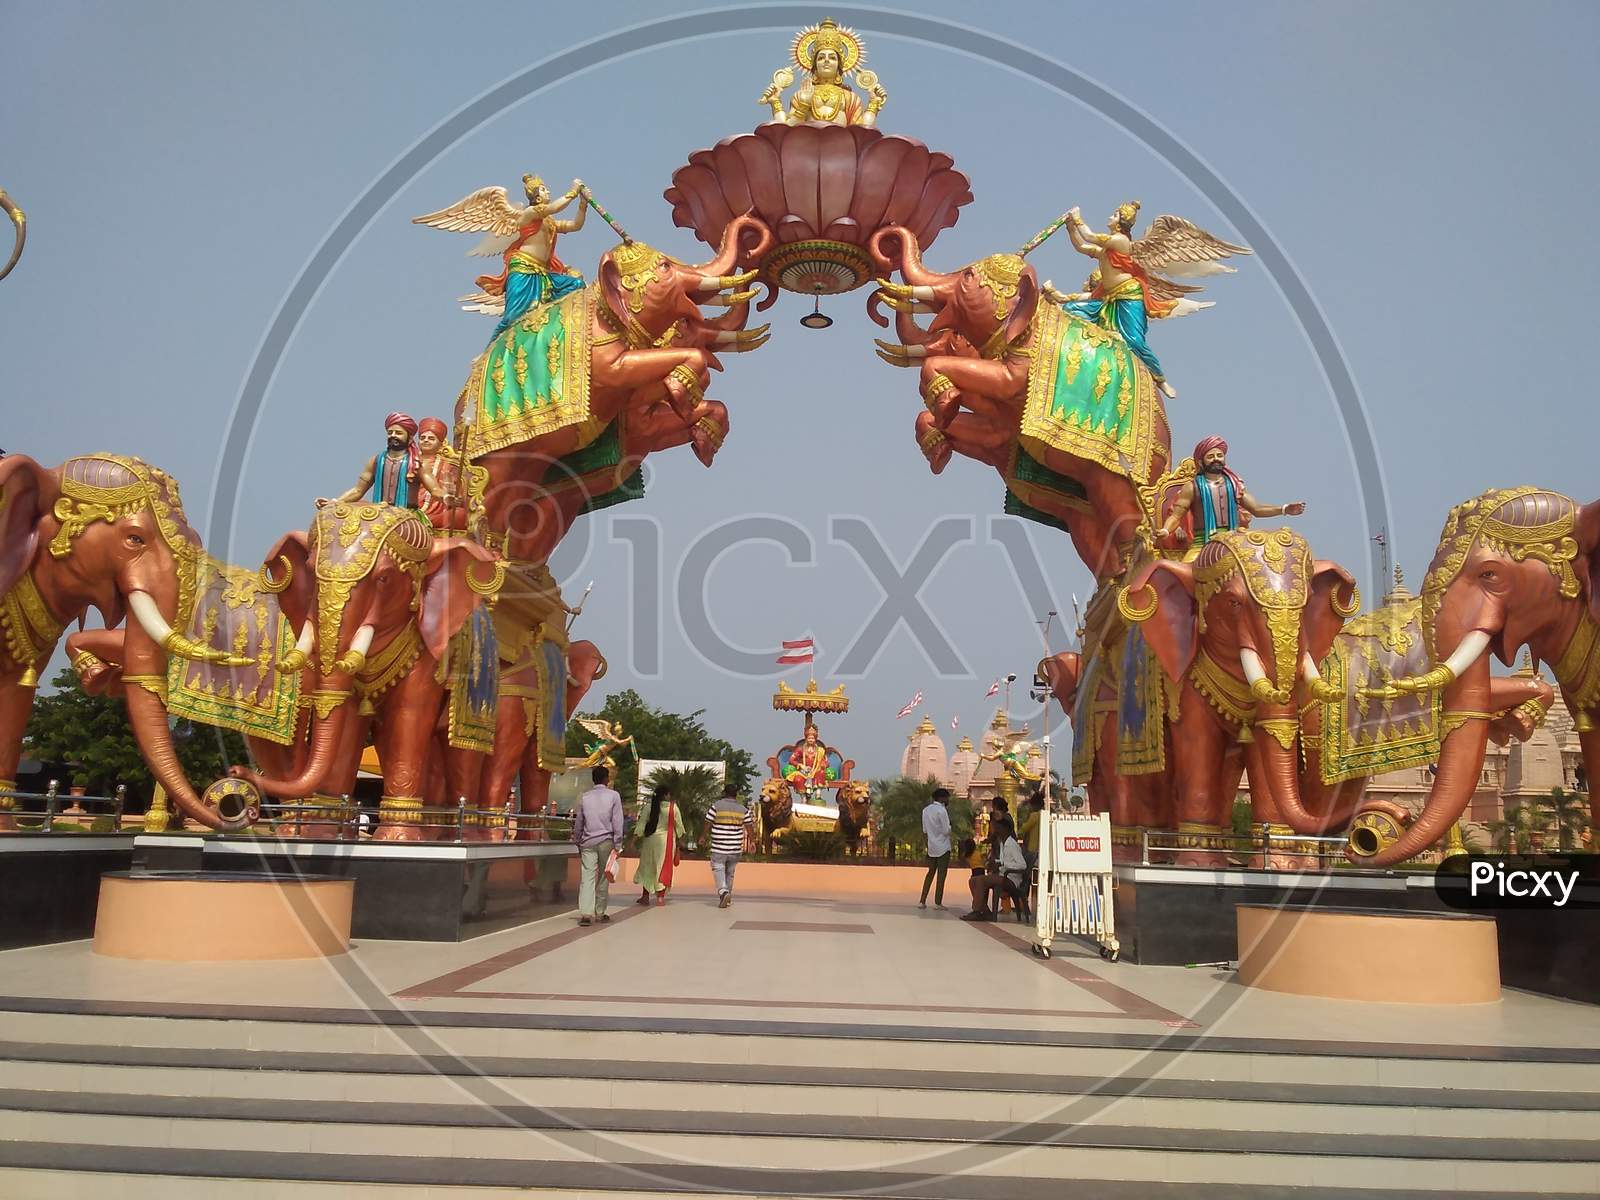 Eliphant statue nilakhanth dhan poicha Gujarat India